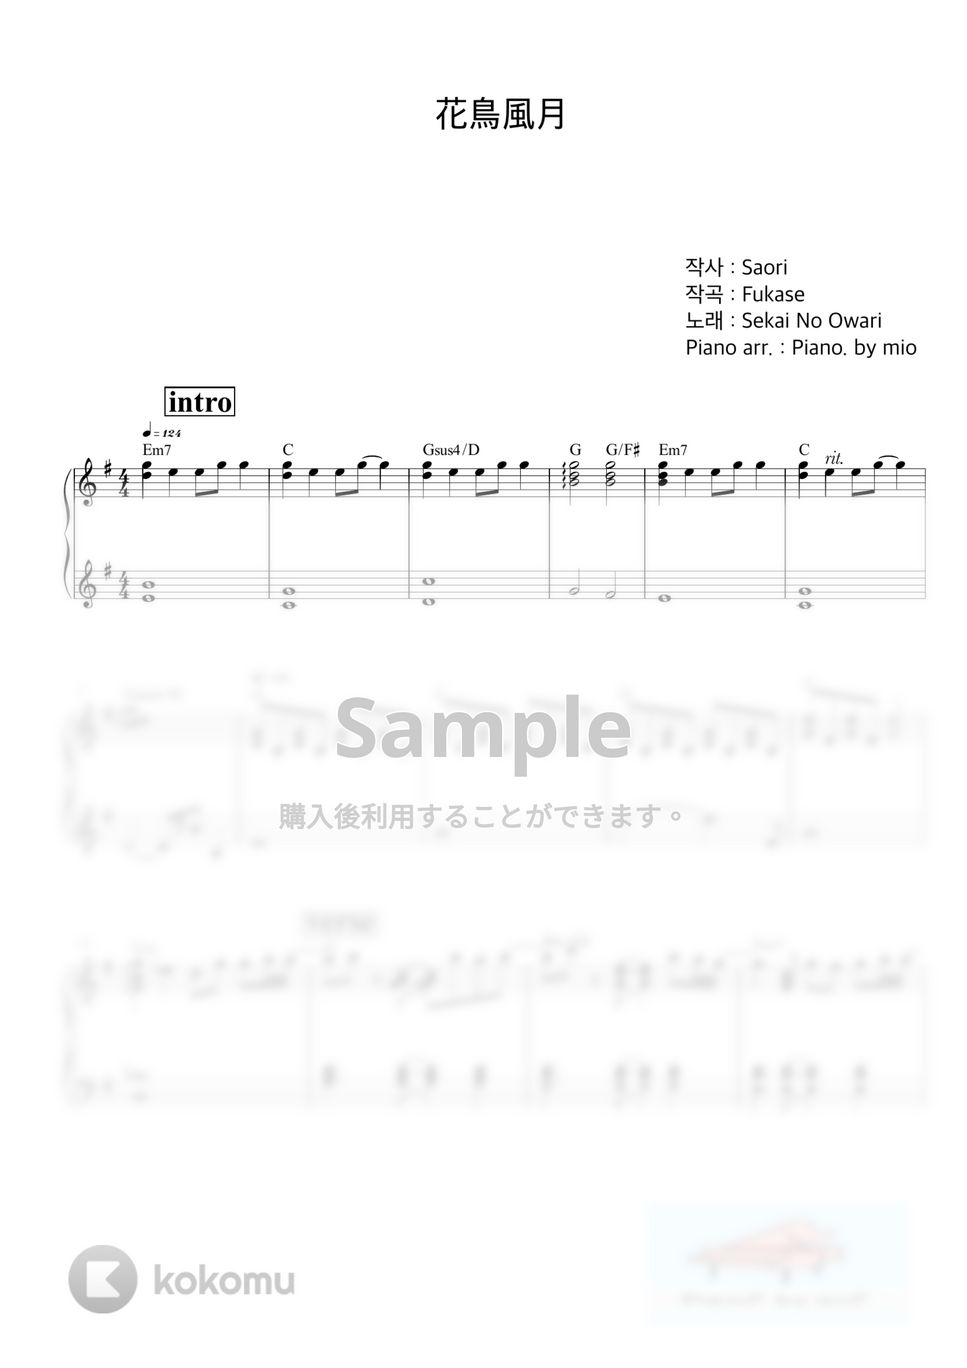 SEKAI NO OWARI - 花鳥風月 by Piano. by mio